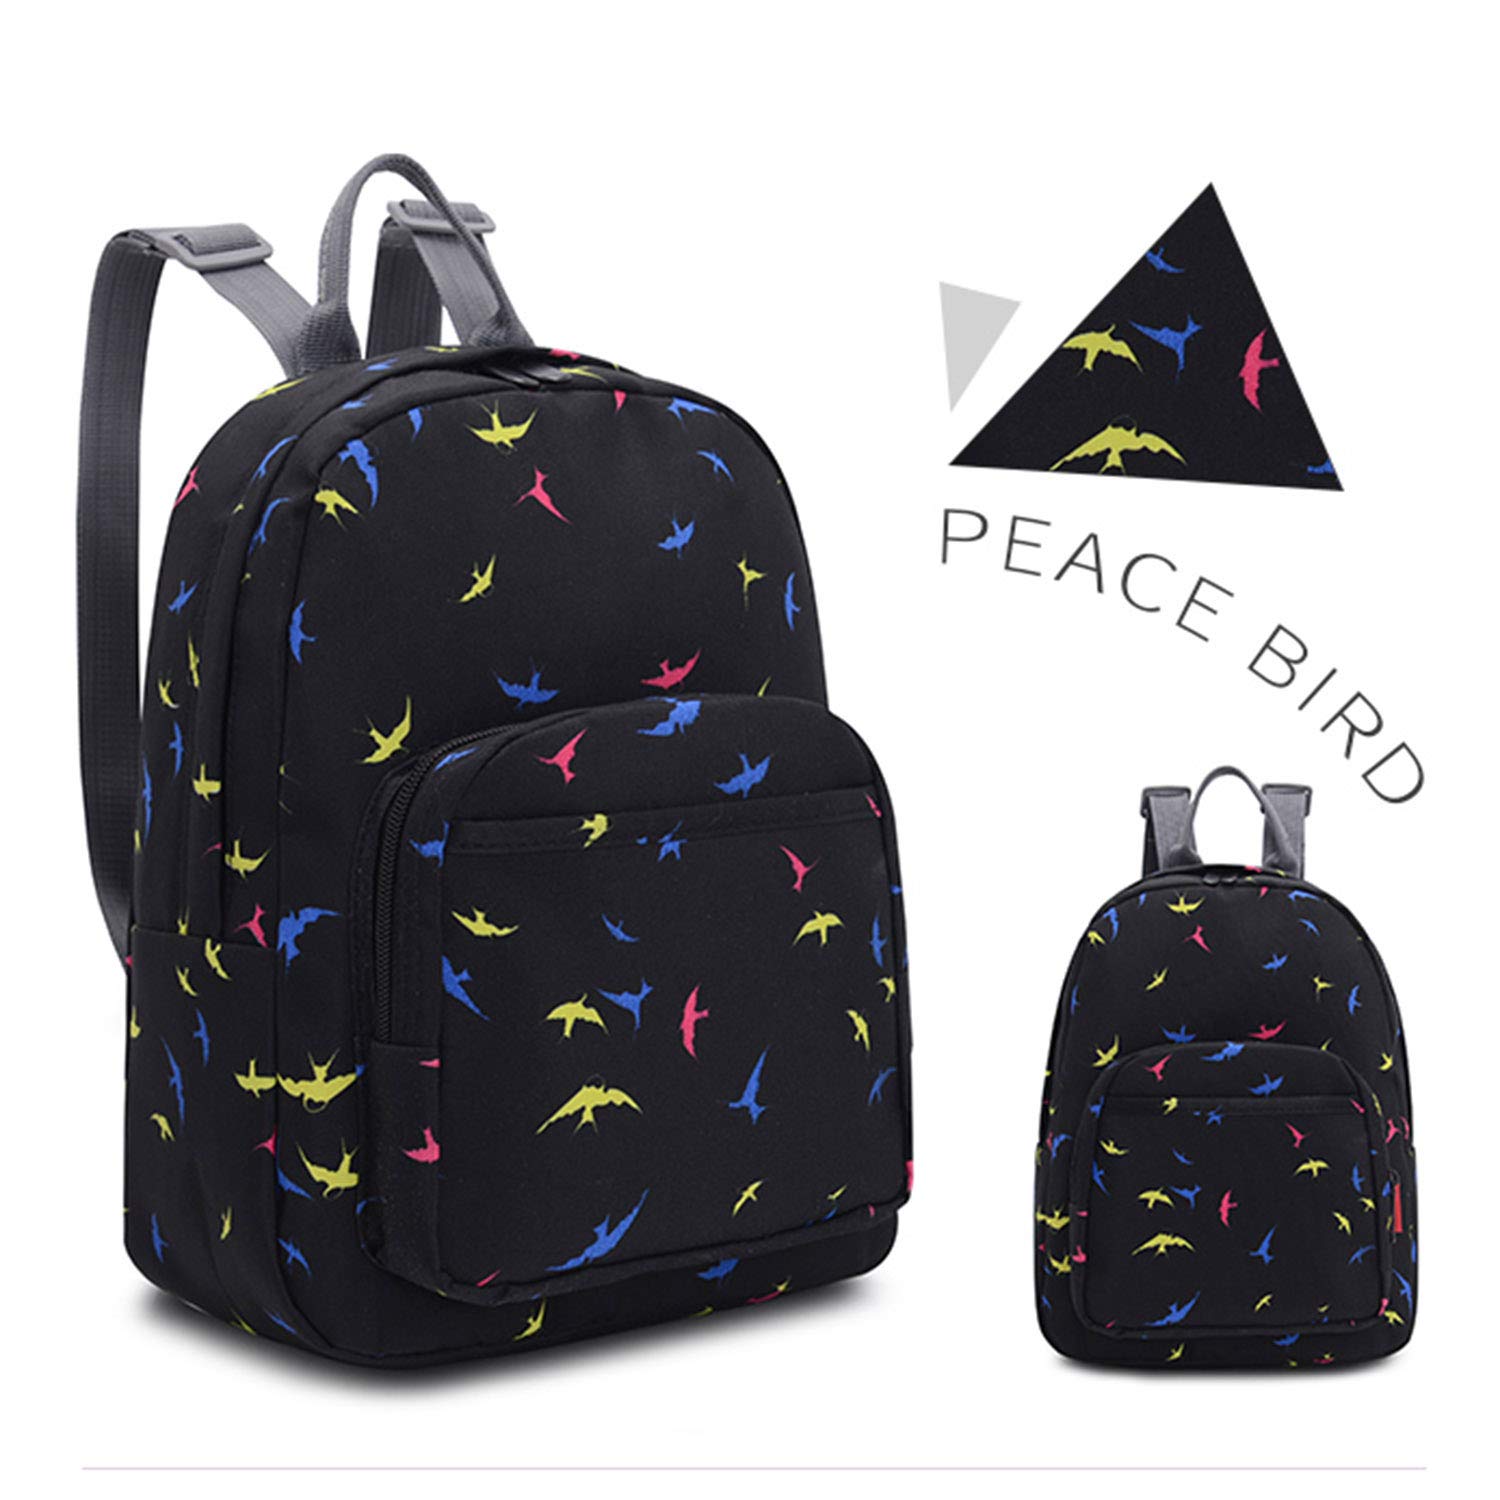 Bravo Mini Backpack, Beautiful 11